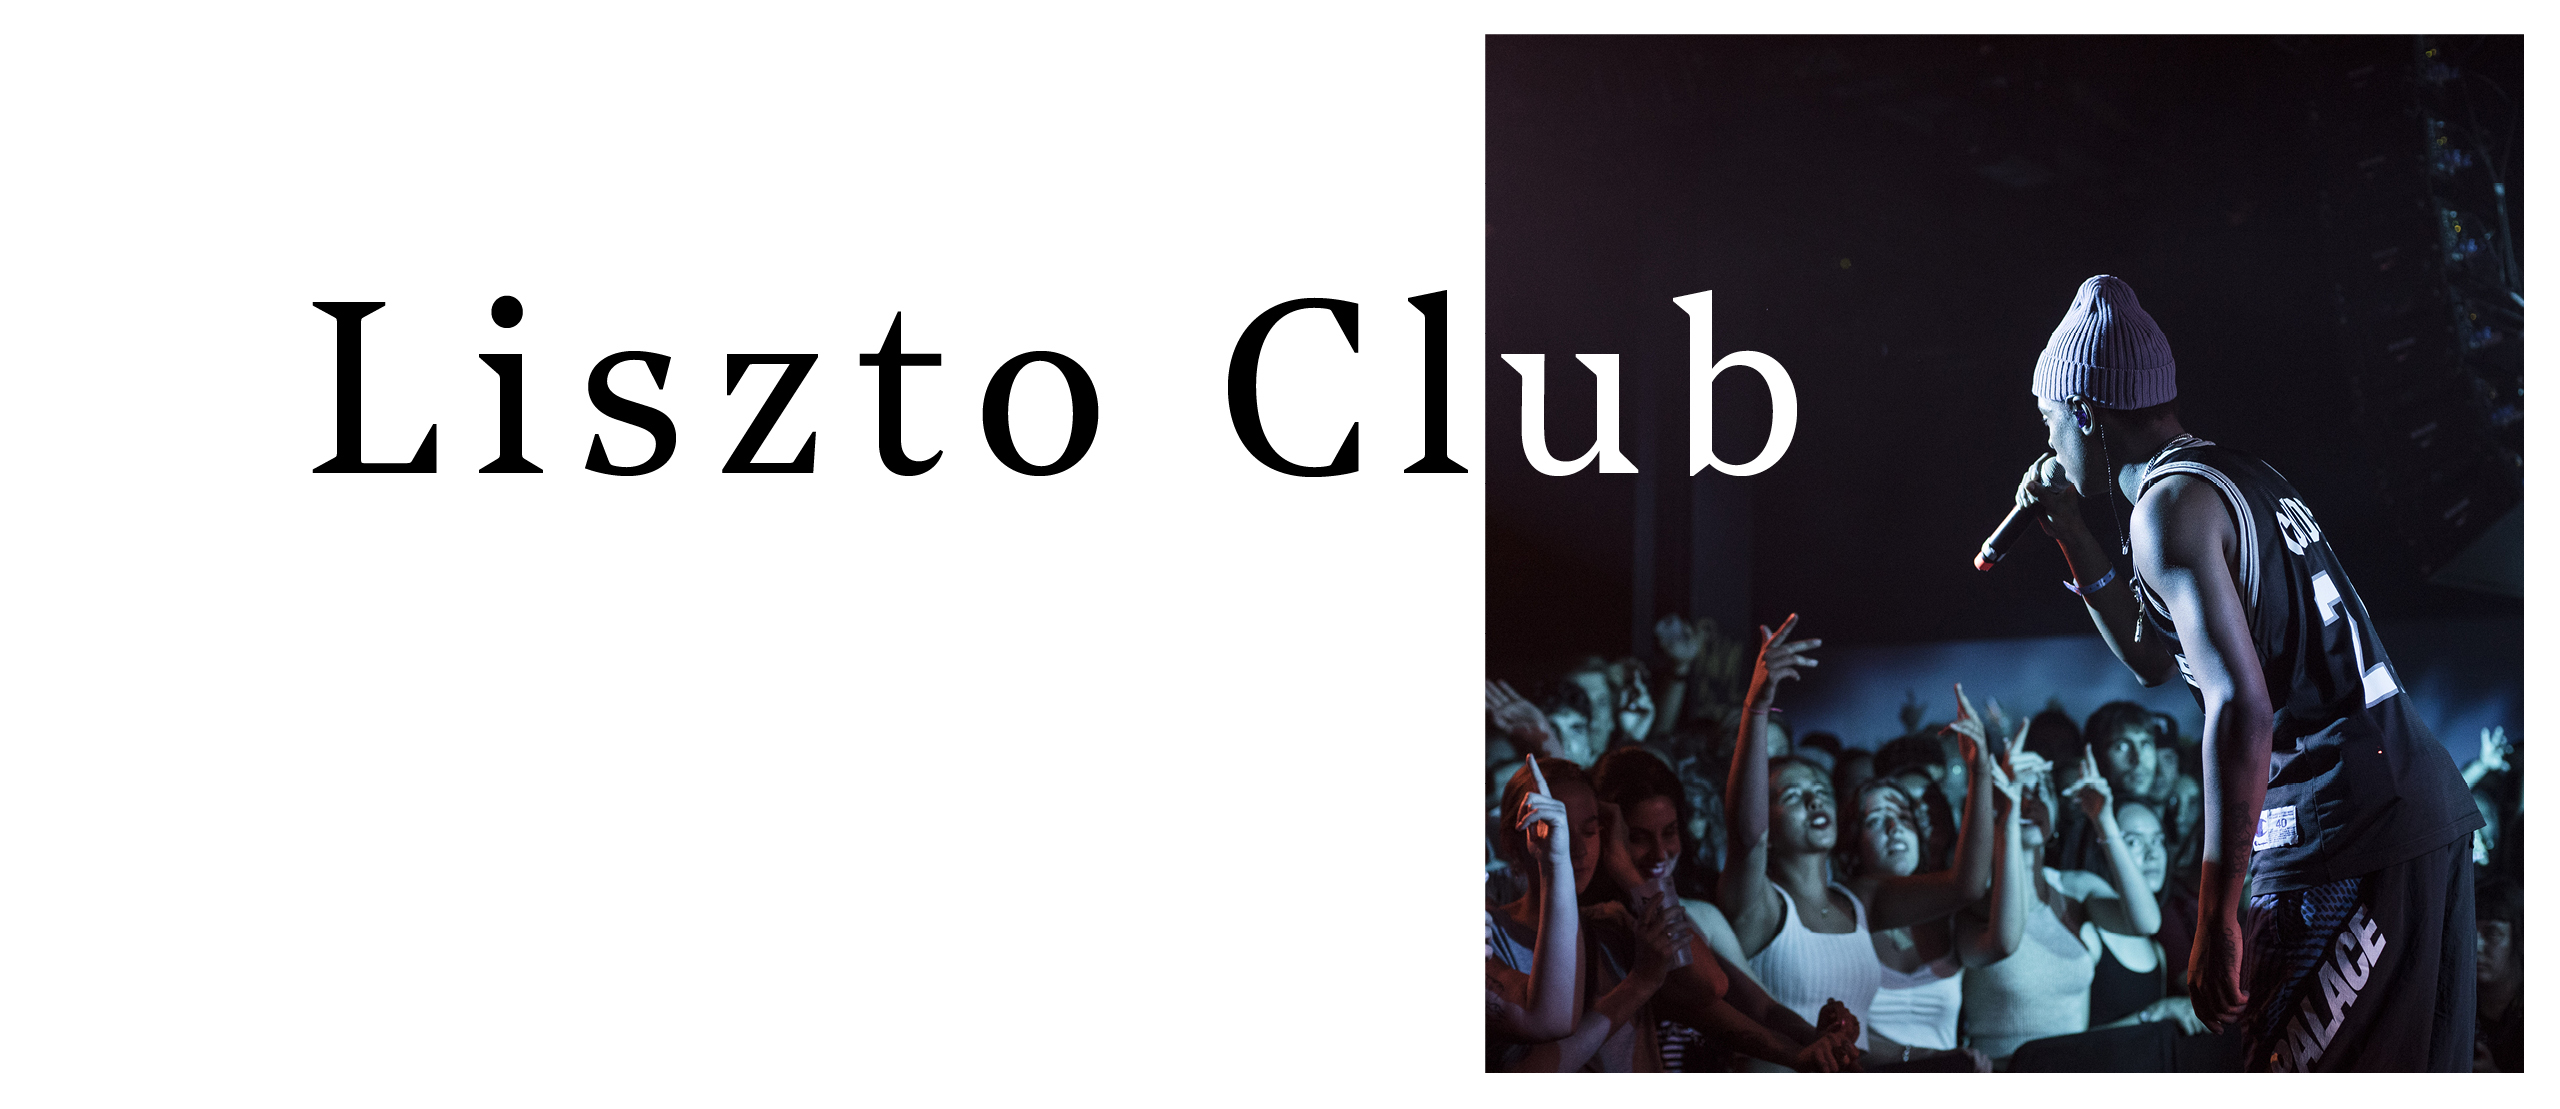 Liszto Club